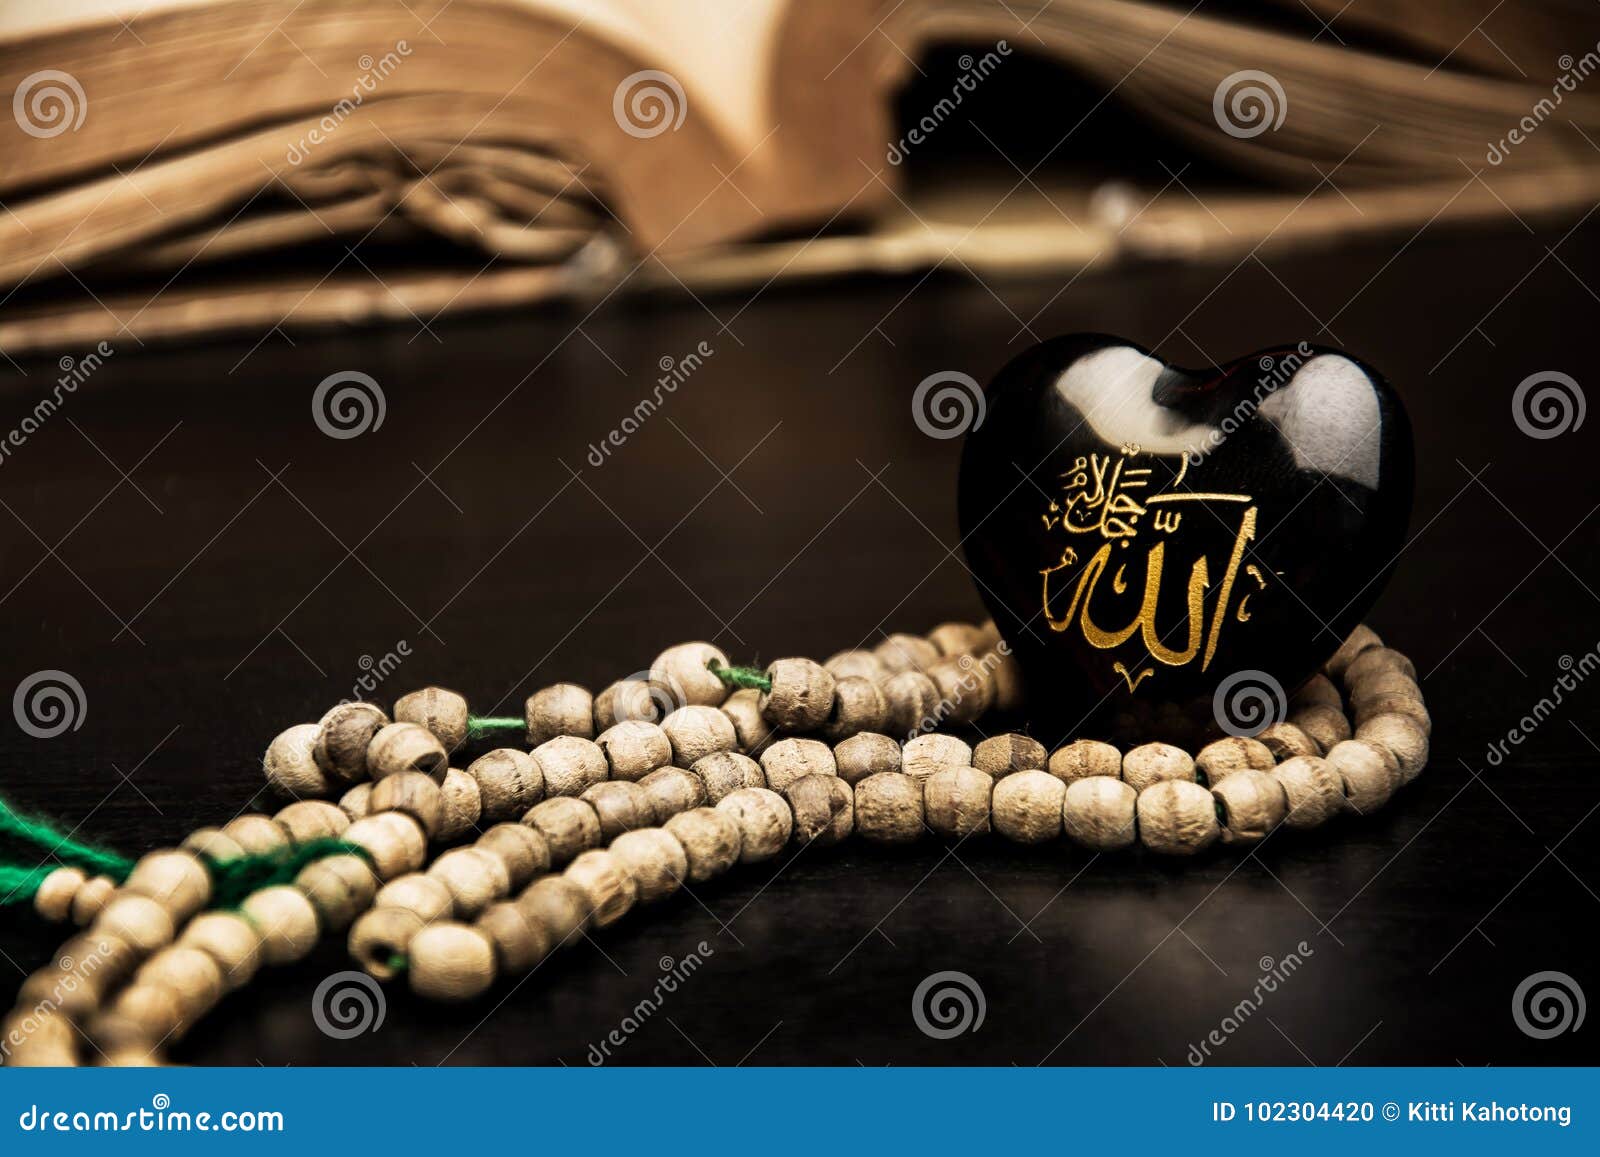 Allah god of Islam stock photo. Image of muslim, charity - 102304420